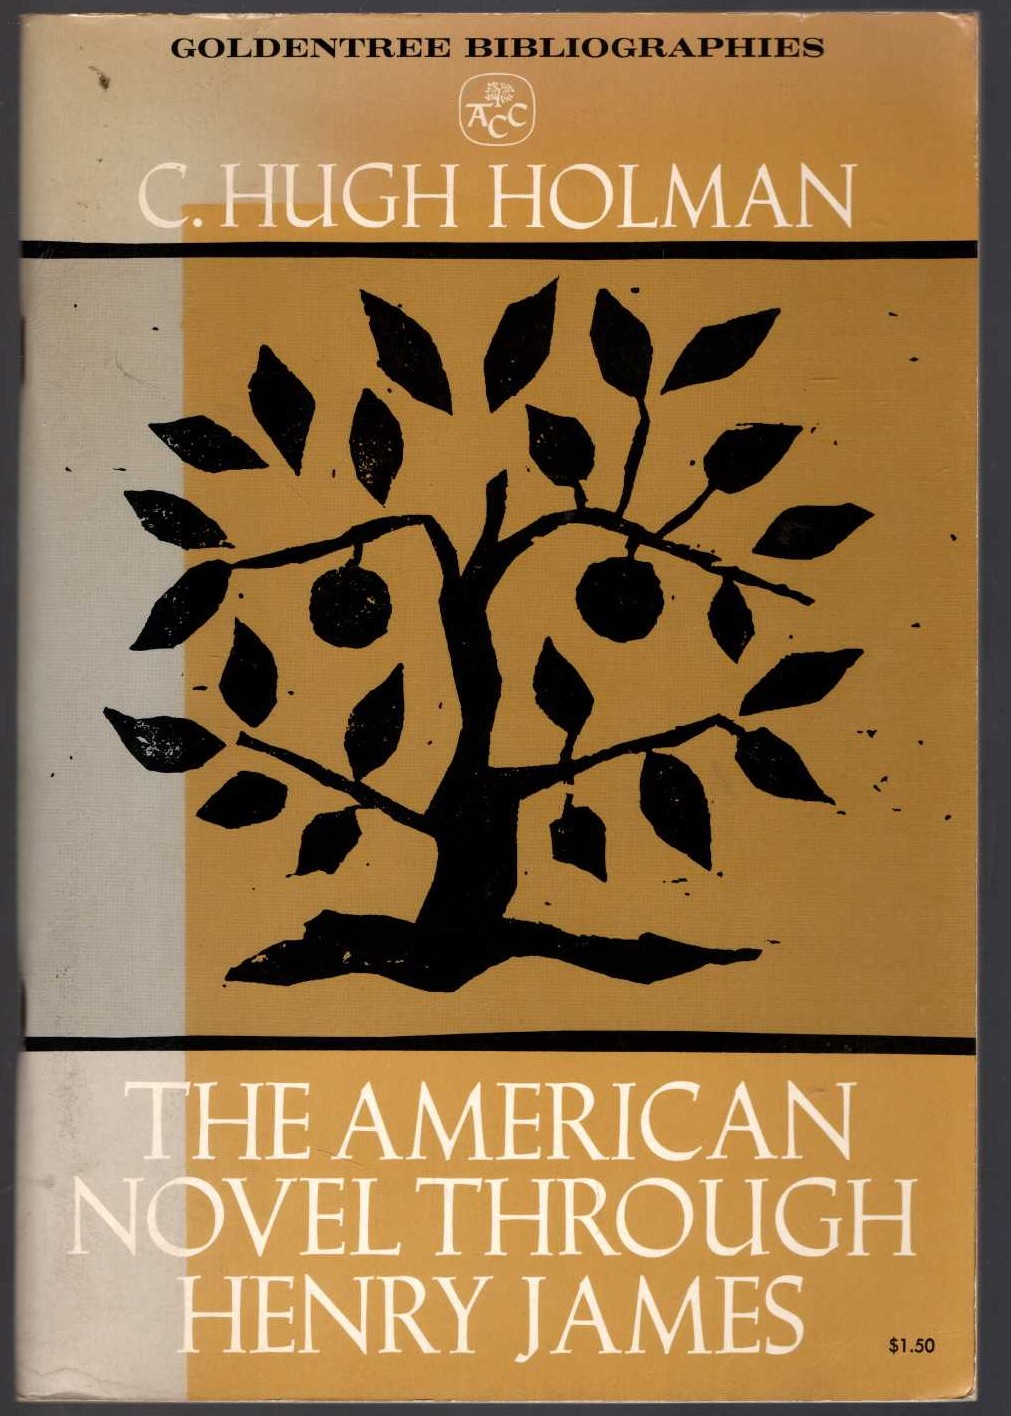 C.Hugh Holman  THE AMERICAN NOVEL THROUGH HENRY JAMES front book cover image